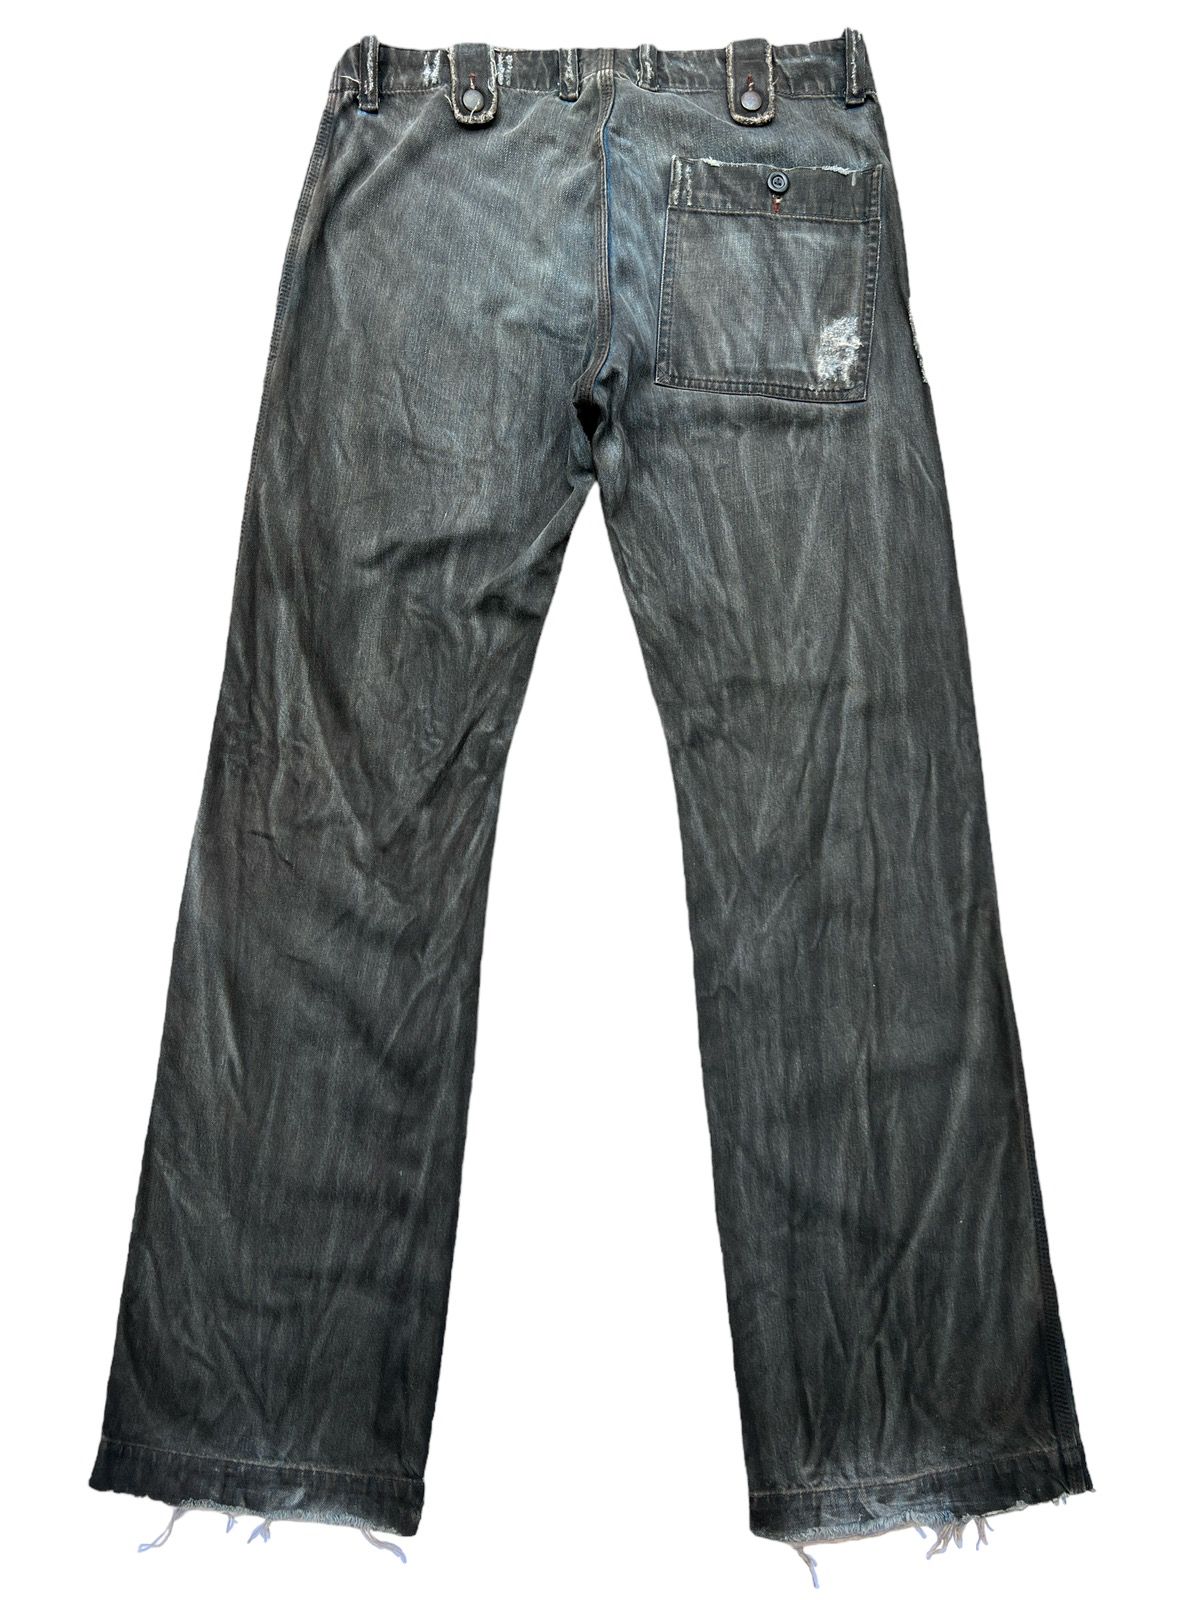 Rare🔥Diesel MultiPocket Distressed Baggy Bondage Jeans 34x34 - 3